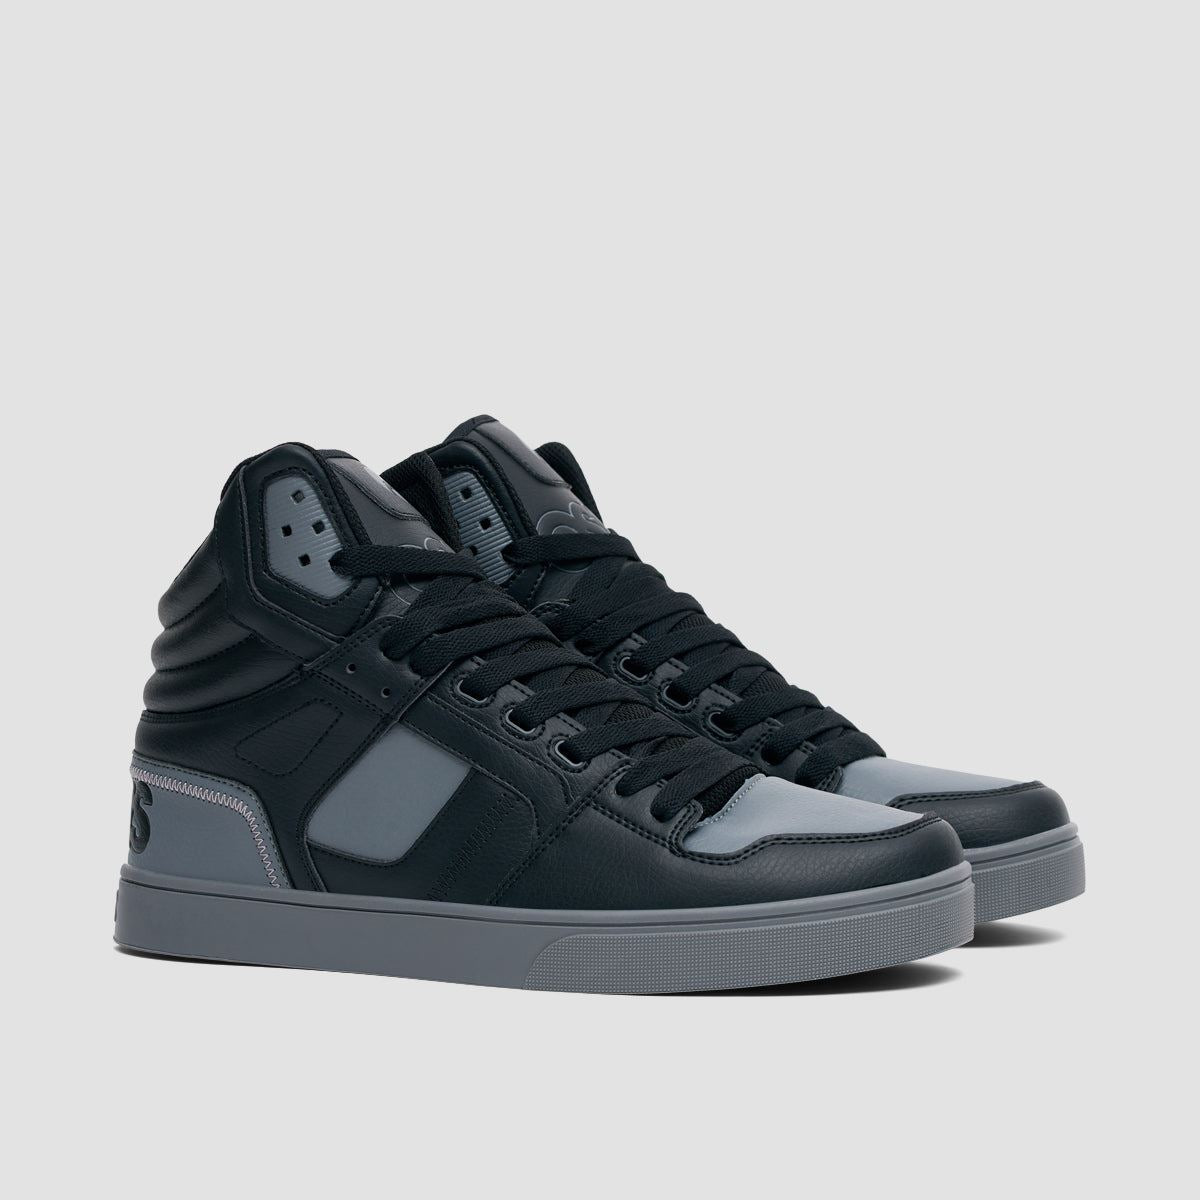 Osiris Clone High Top Shoes - Black/Grey/Grey